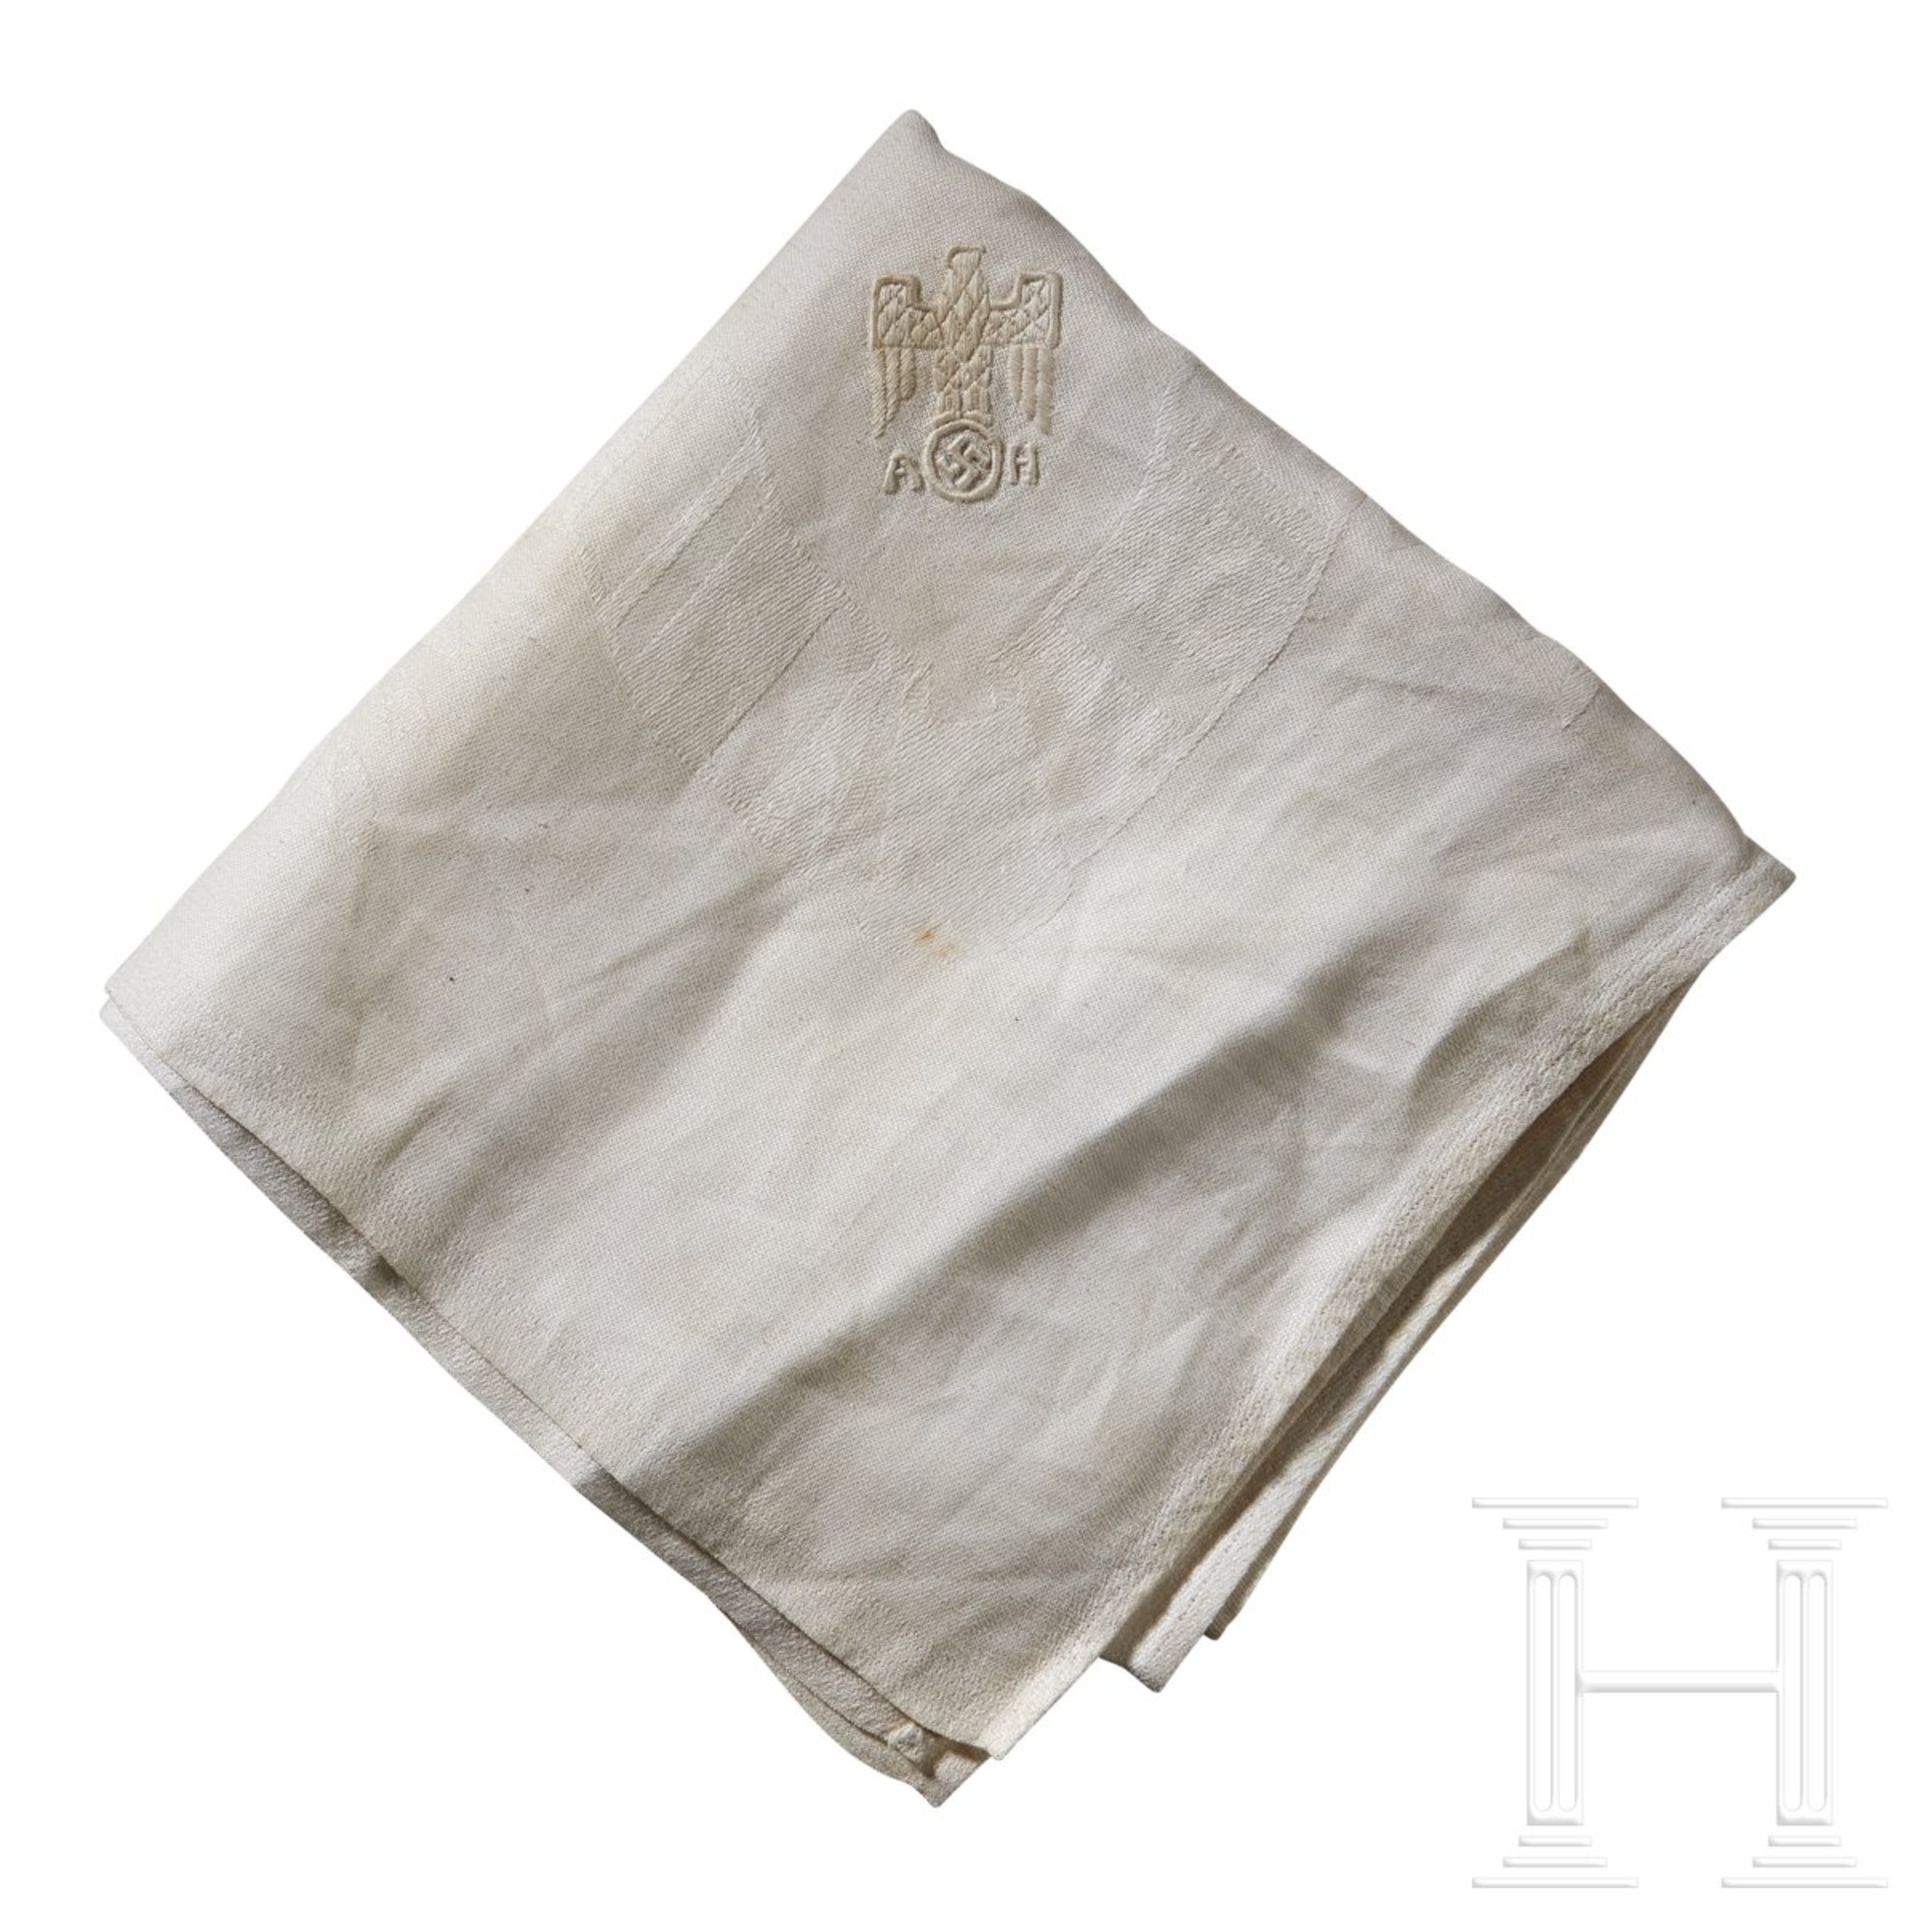 <de>Adolf Hitler – a Napkin from his Formal Personal Table Service<br>White color cloth linen napkin